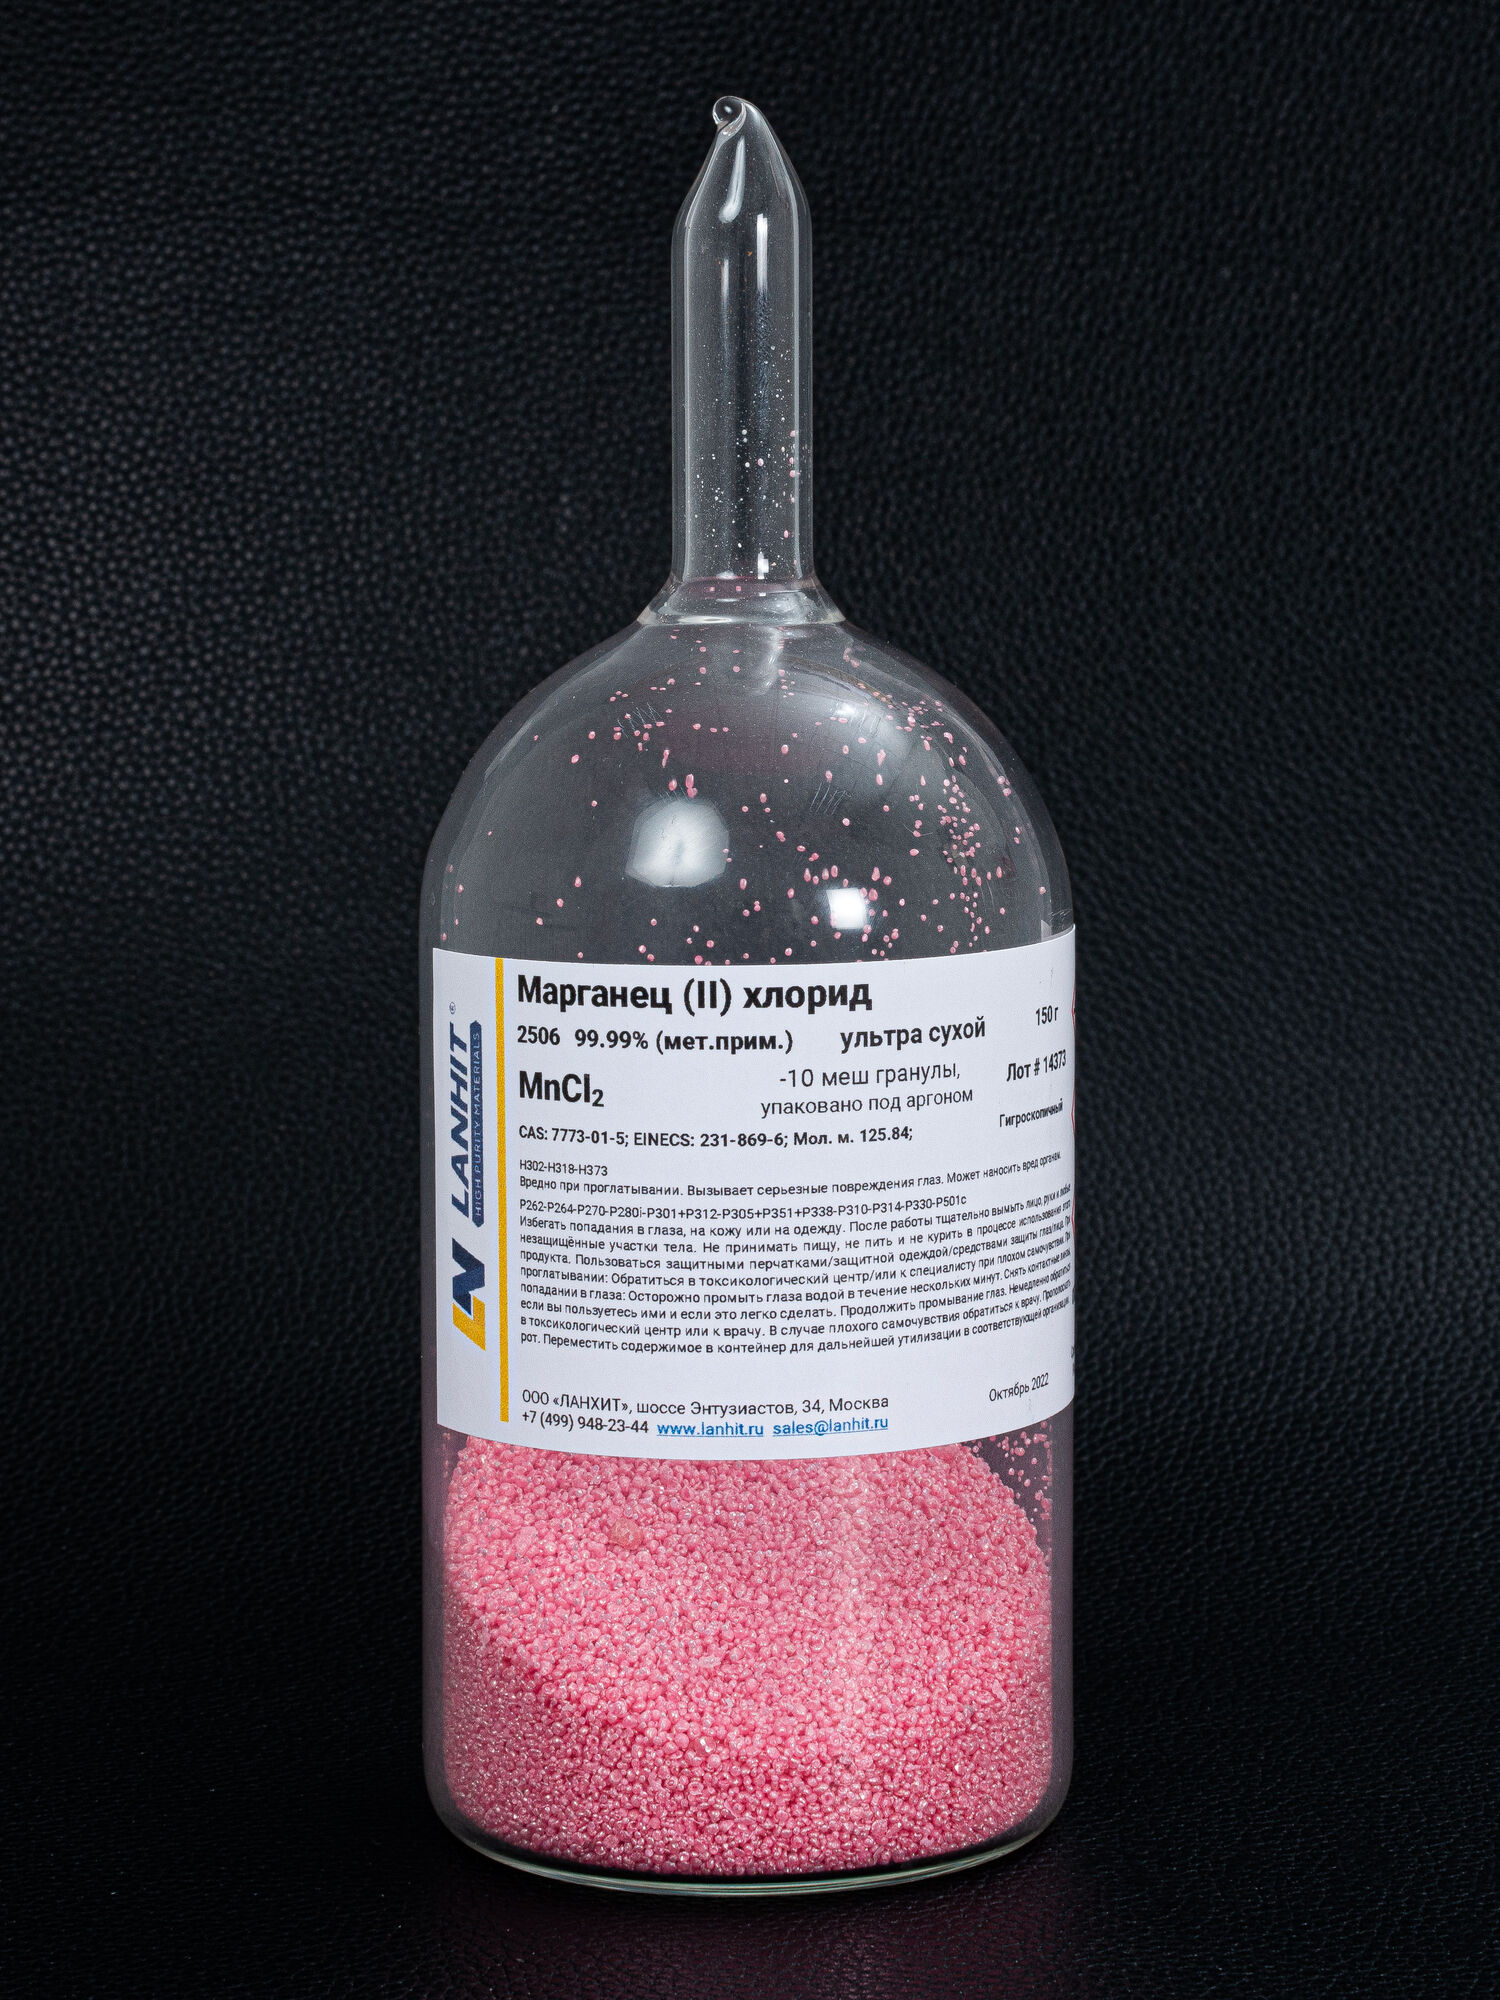 Марганец (II) хлорид, ультра сухой, 99.99% (мет.прим), -10 меш гранулы